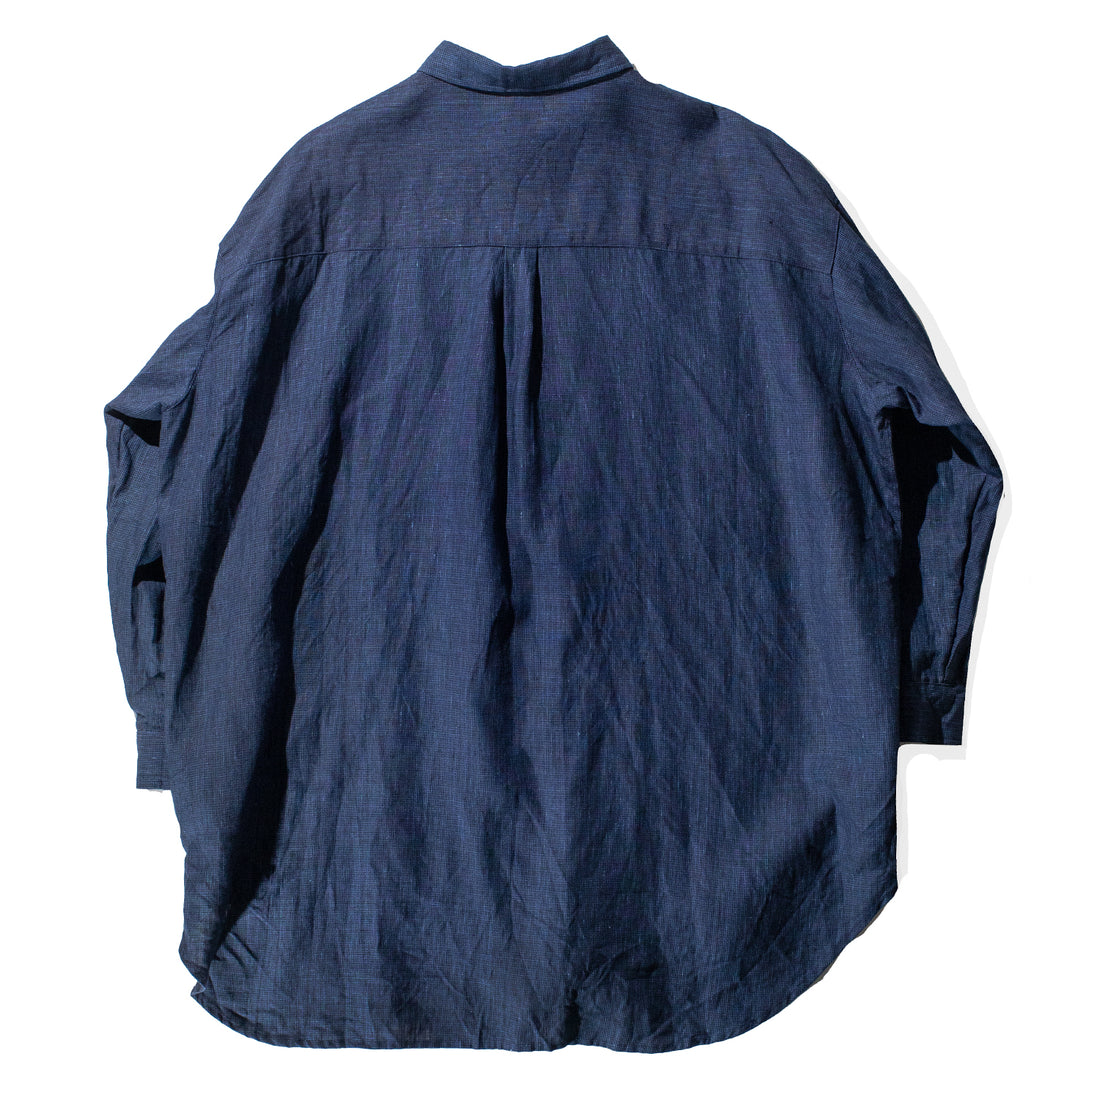 Ichi Antiquités Linen Shirt in Indigo Houndstooth